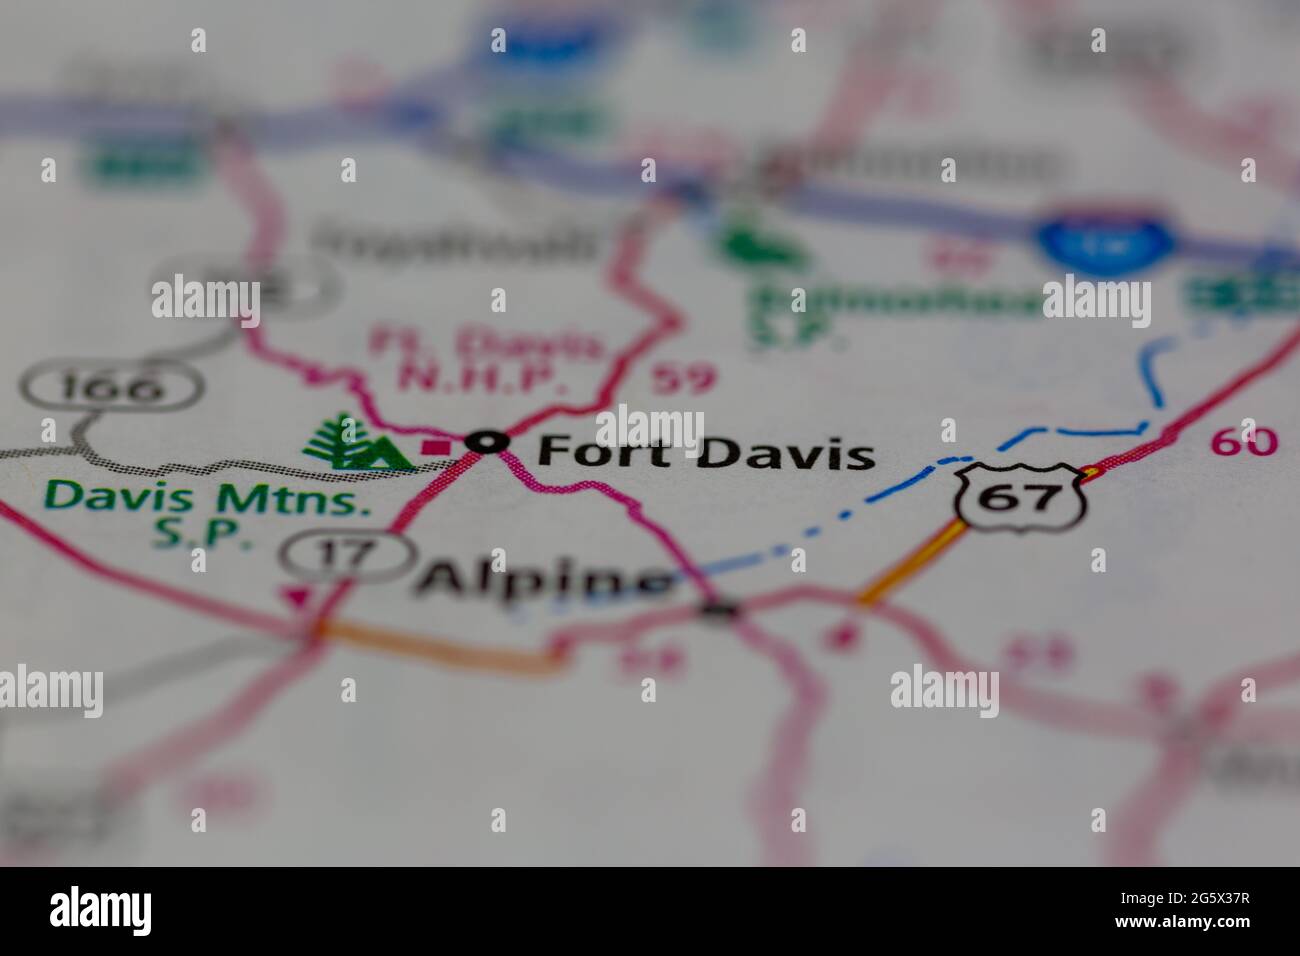 Fort Davis Texas USA se muestra en un mapa geográfico o mapa de carreteras Foto de stock